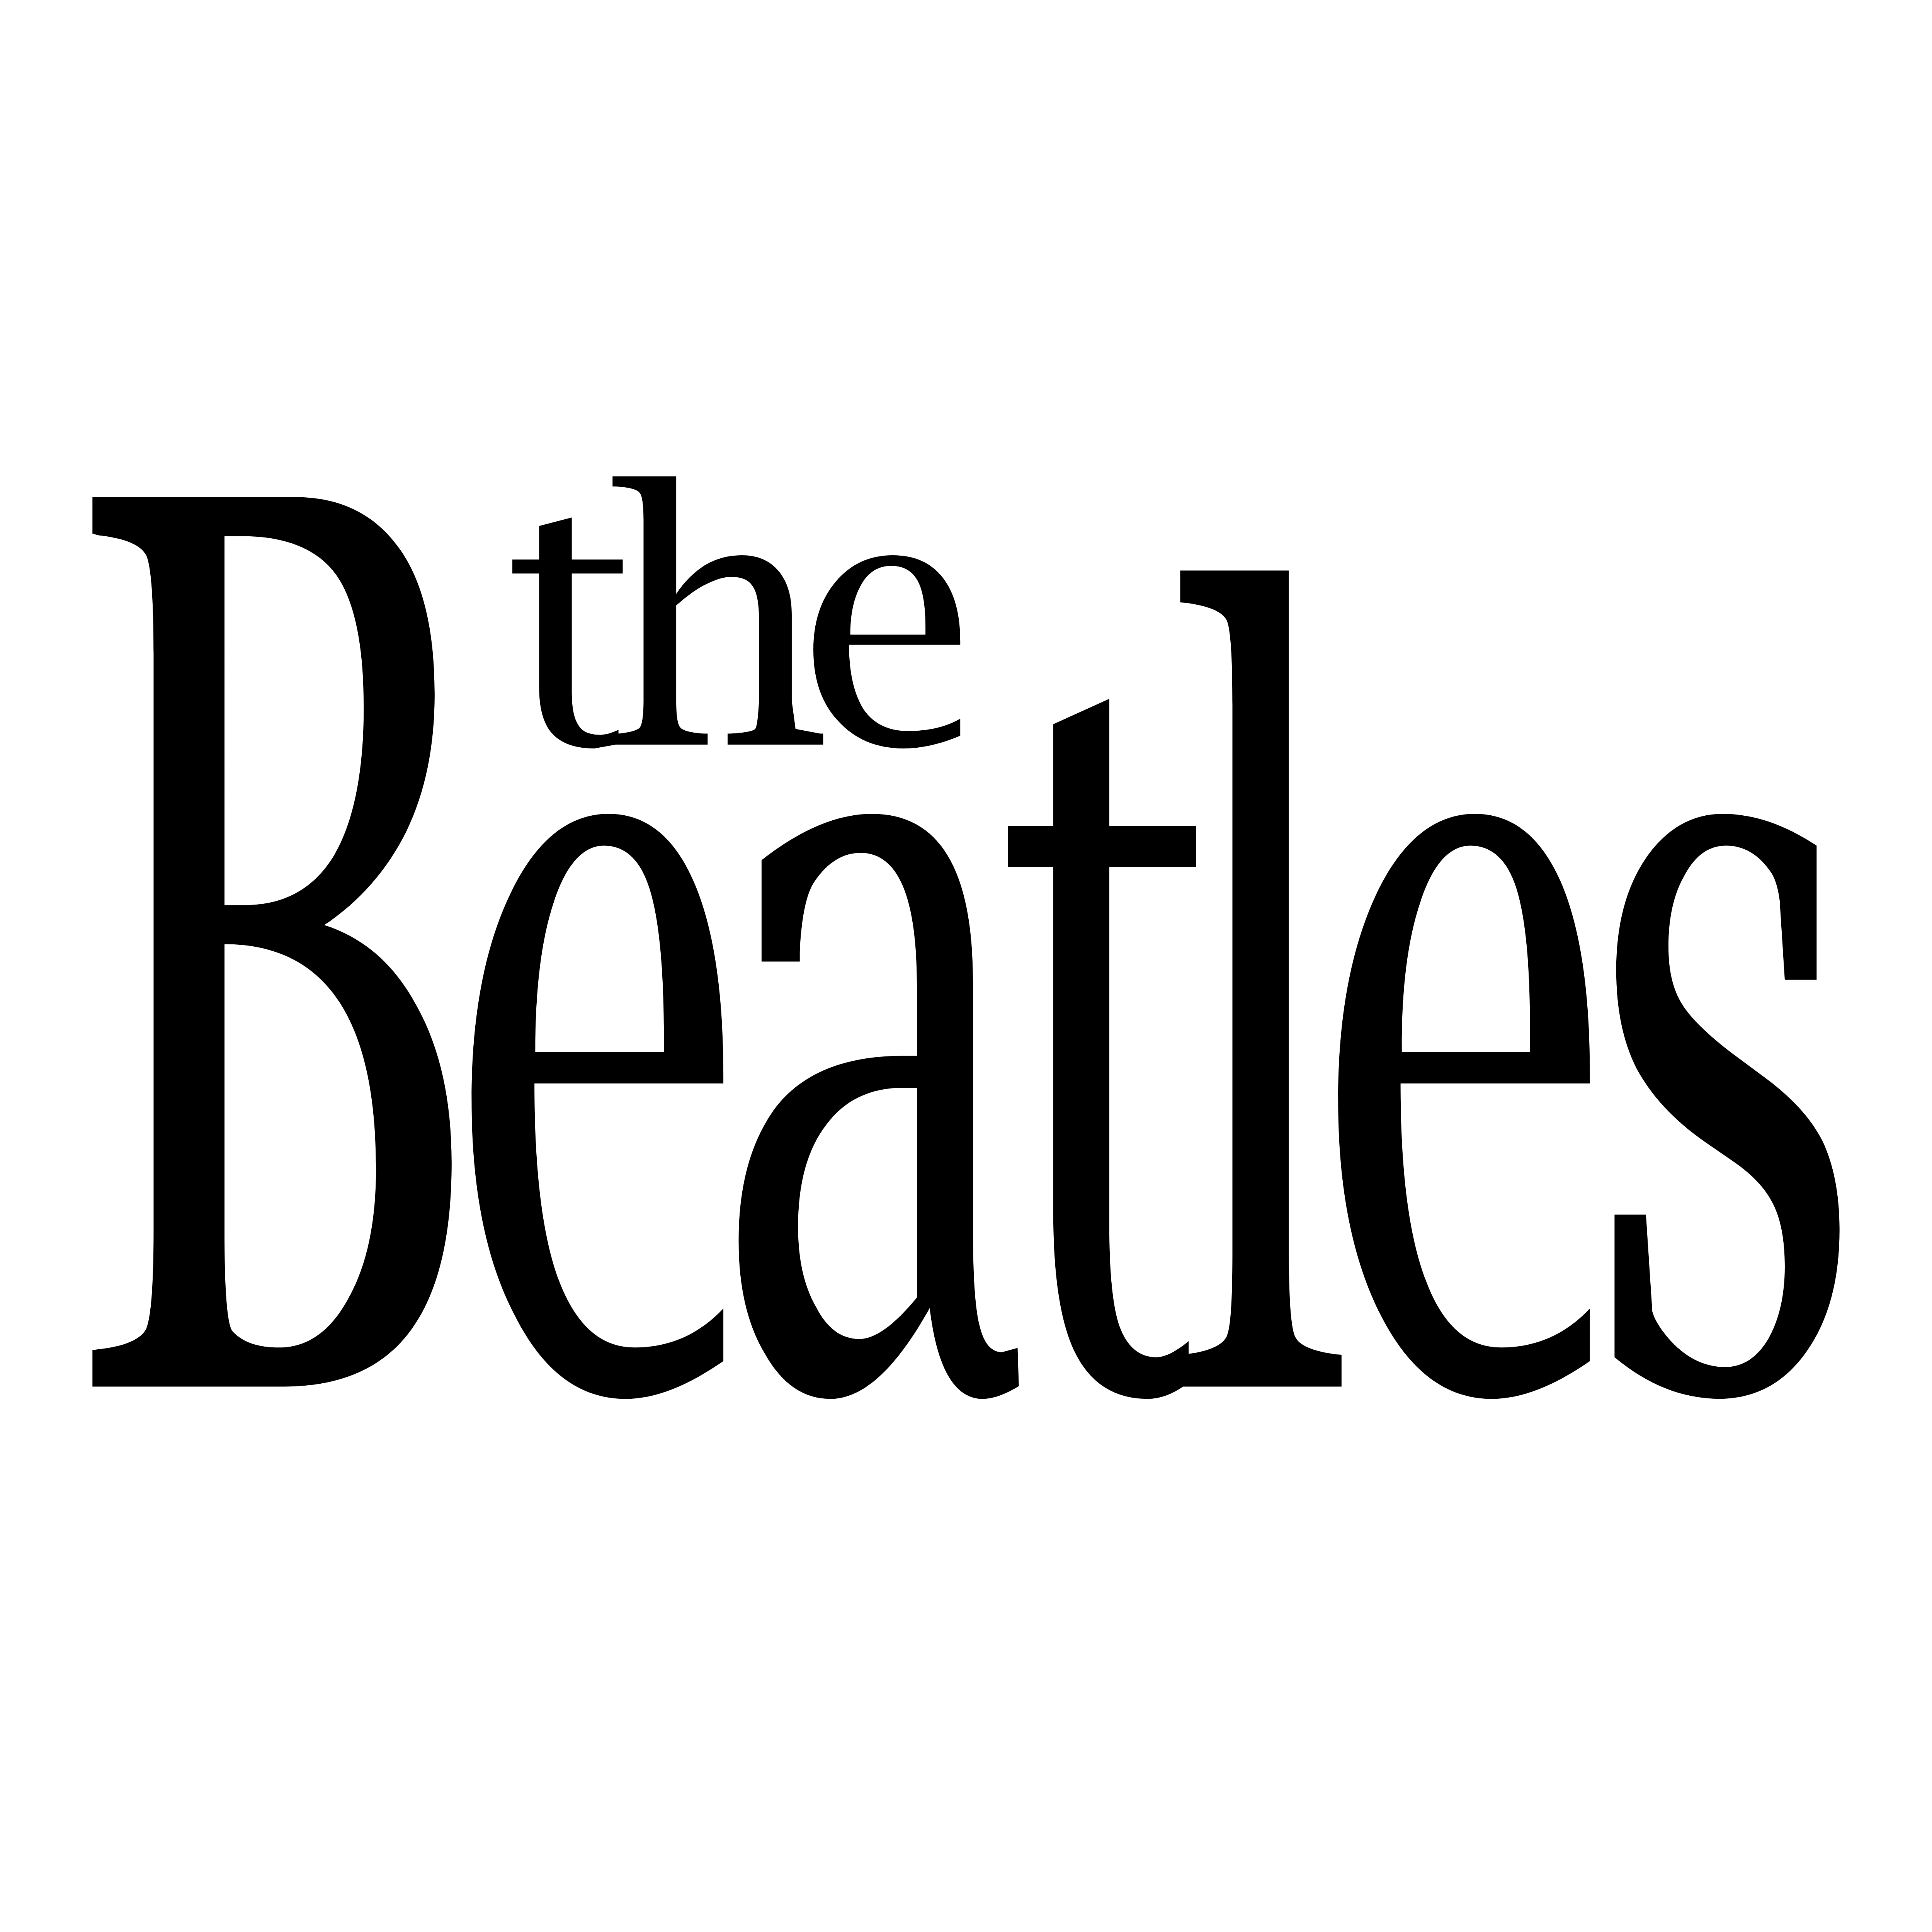 Beatles Free Png Image - Beat